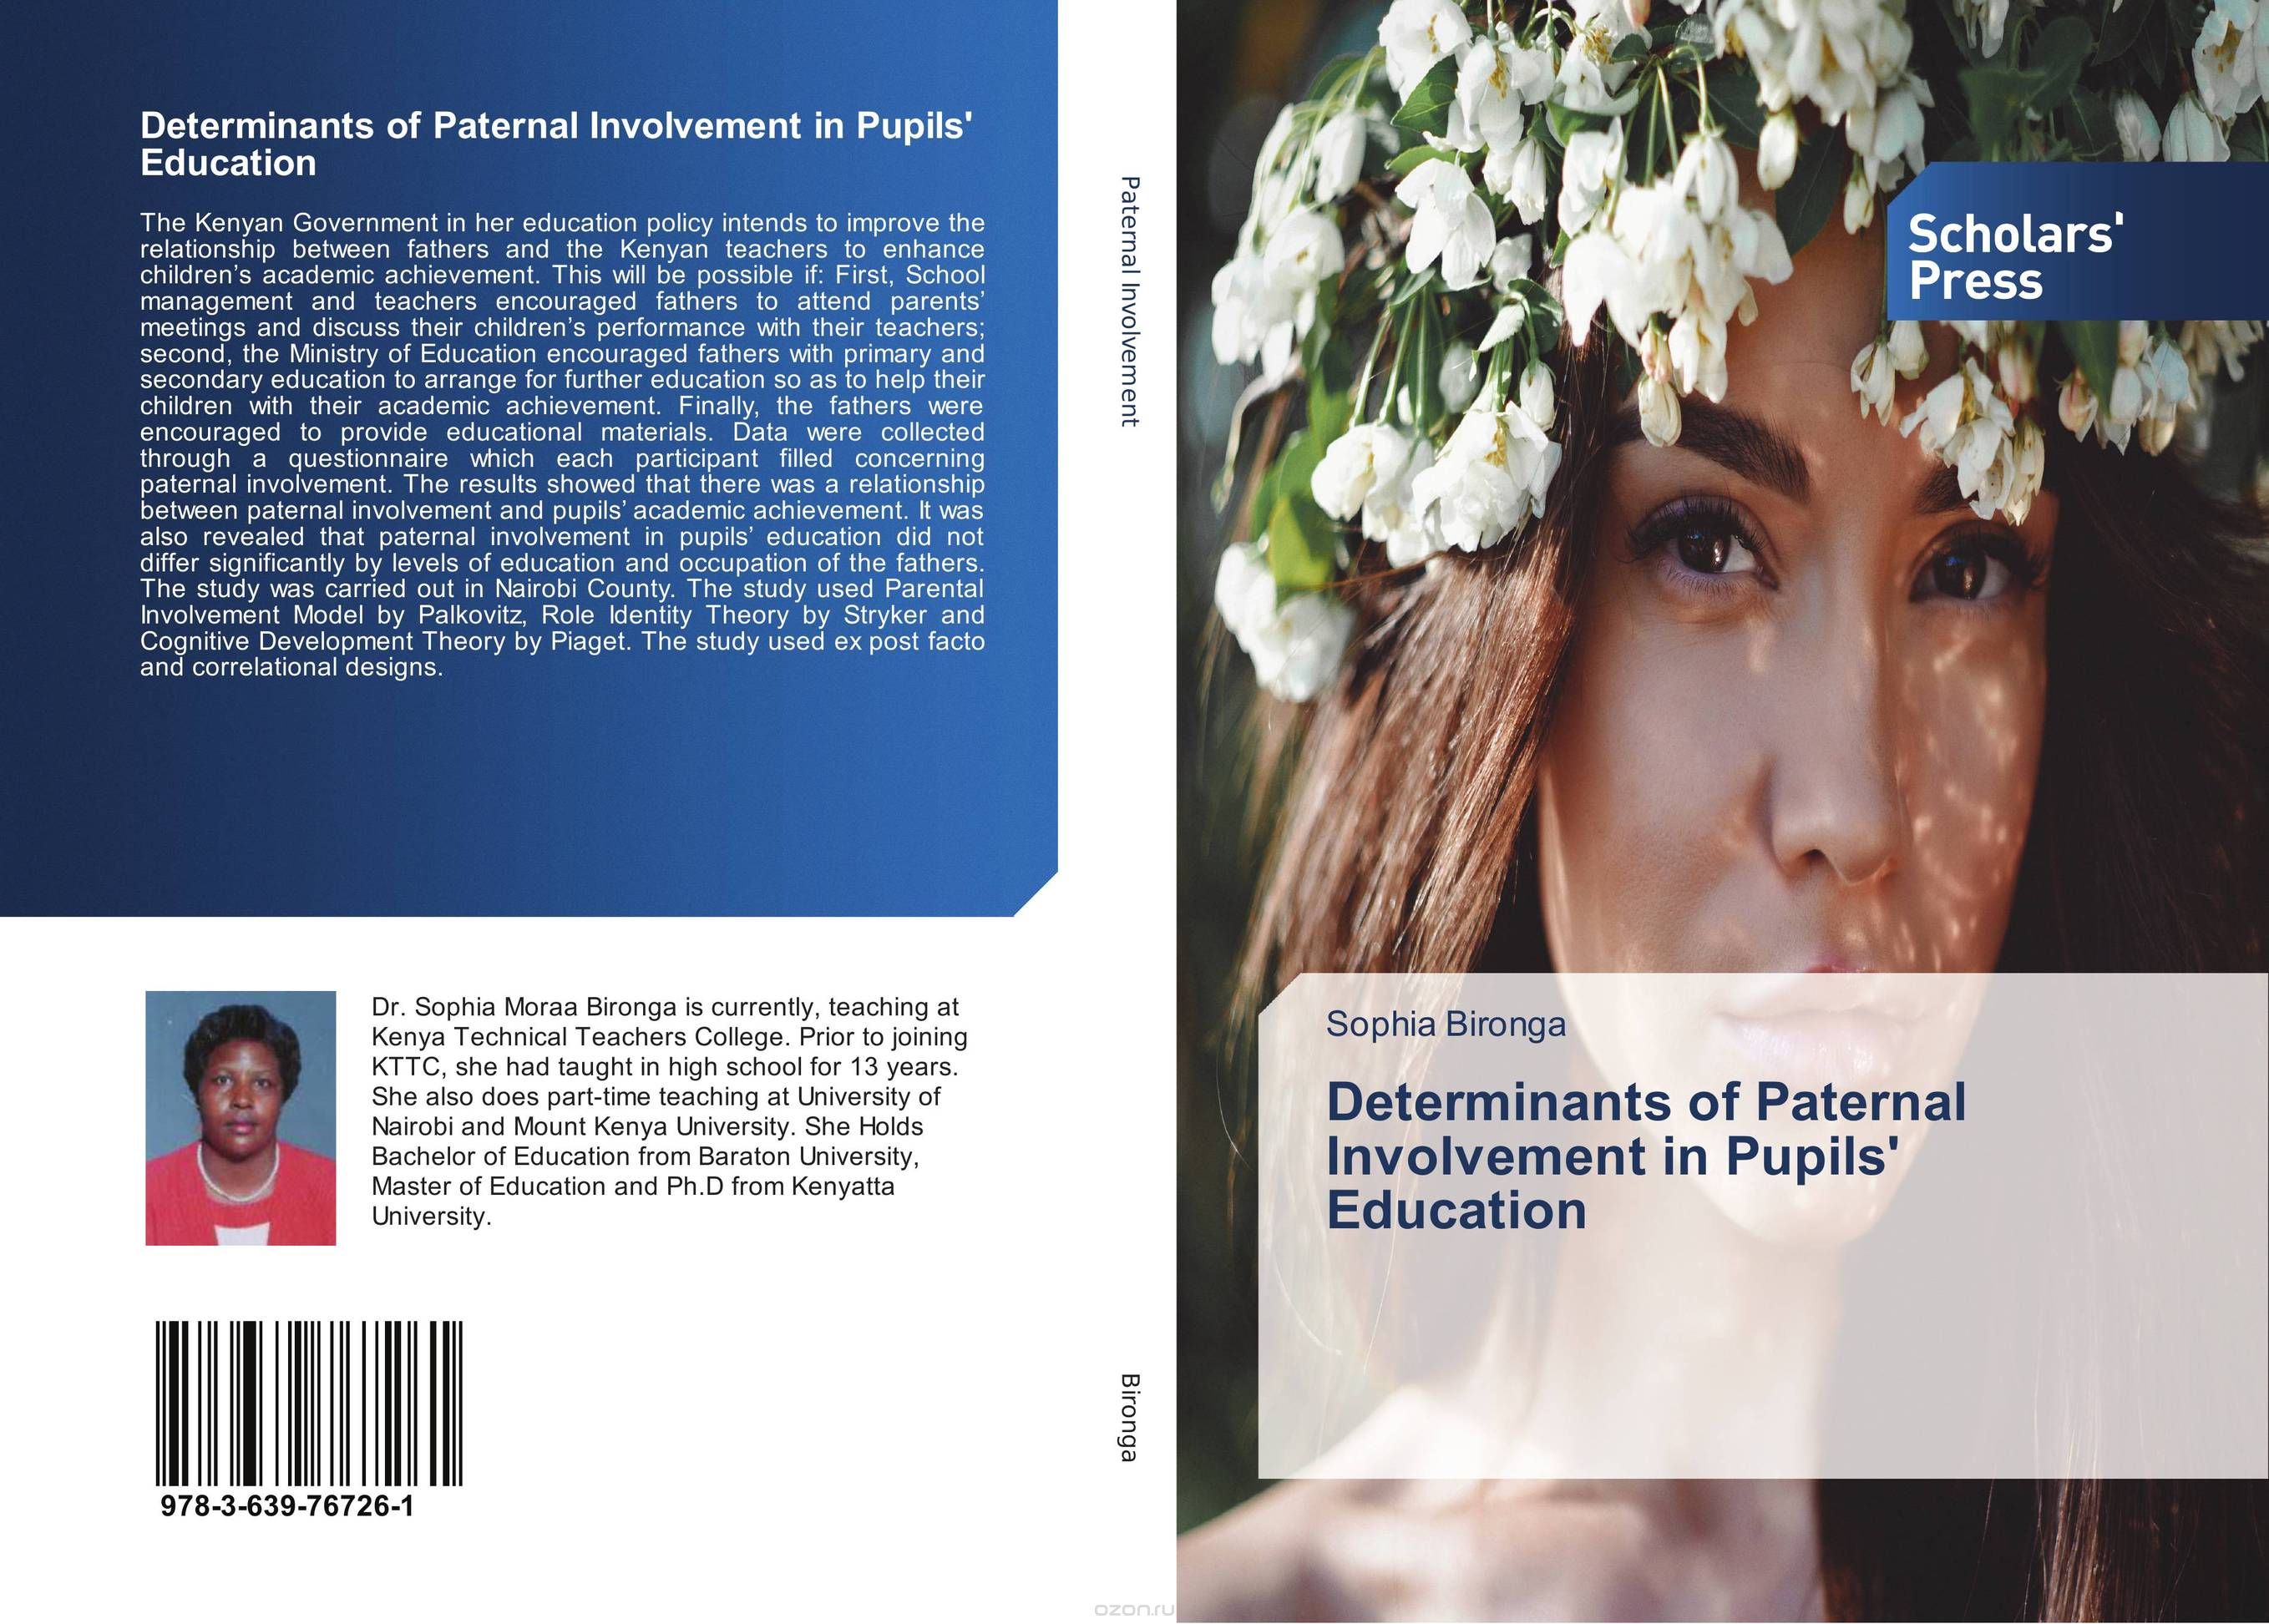 Скачать книгу "Determinants of Paternal Involvement in Pupils' Education"